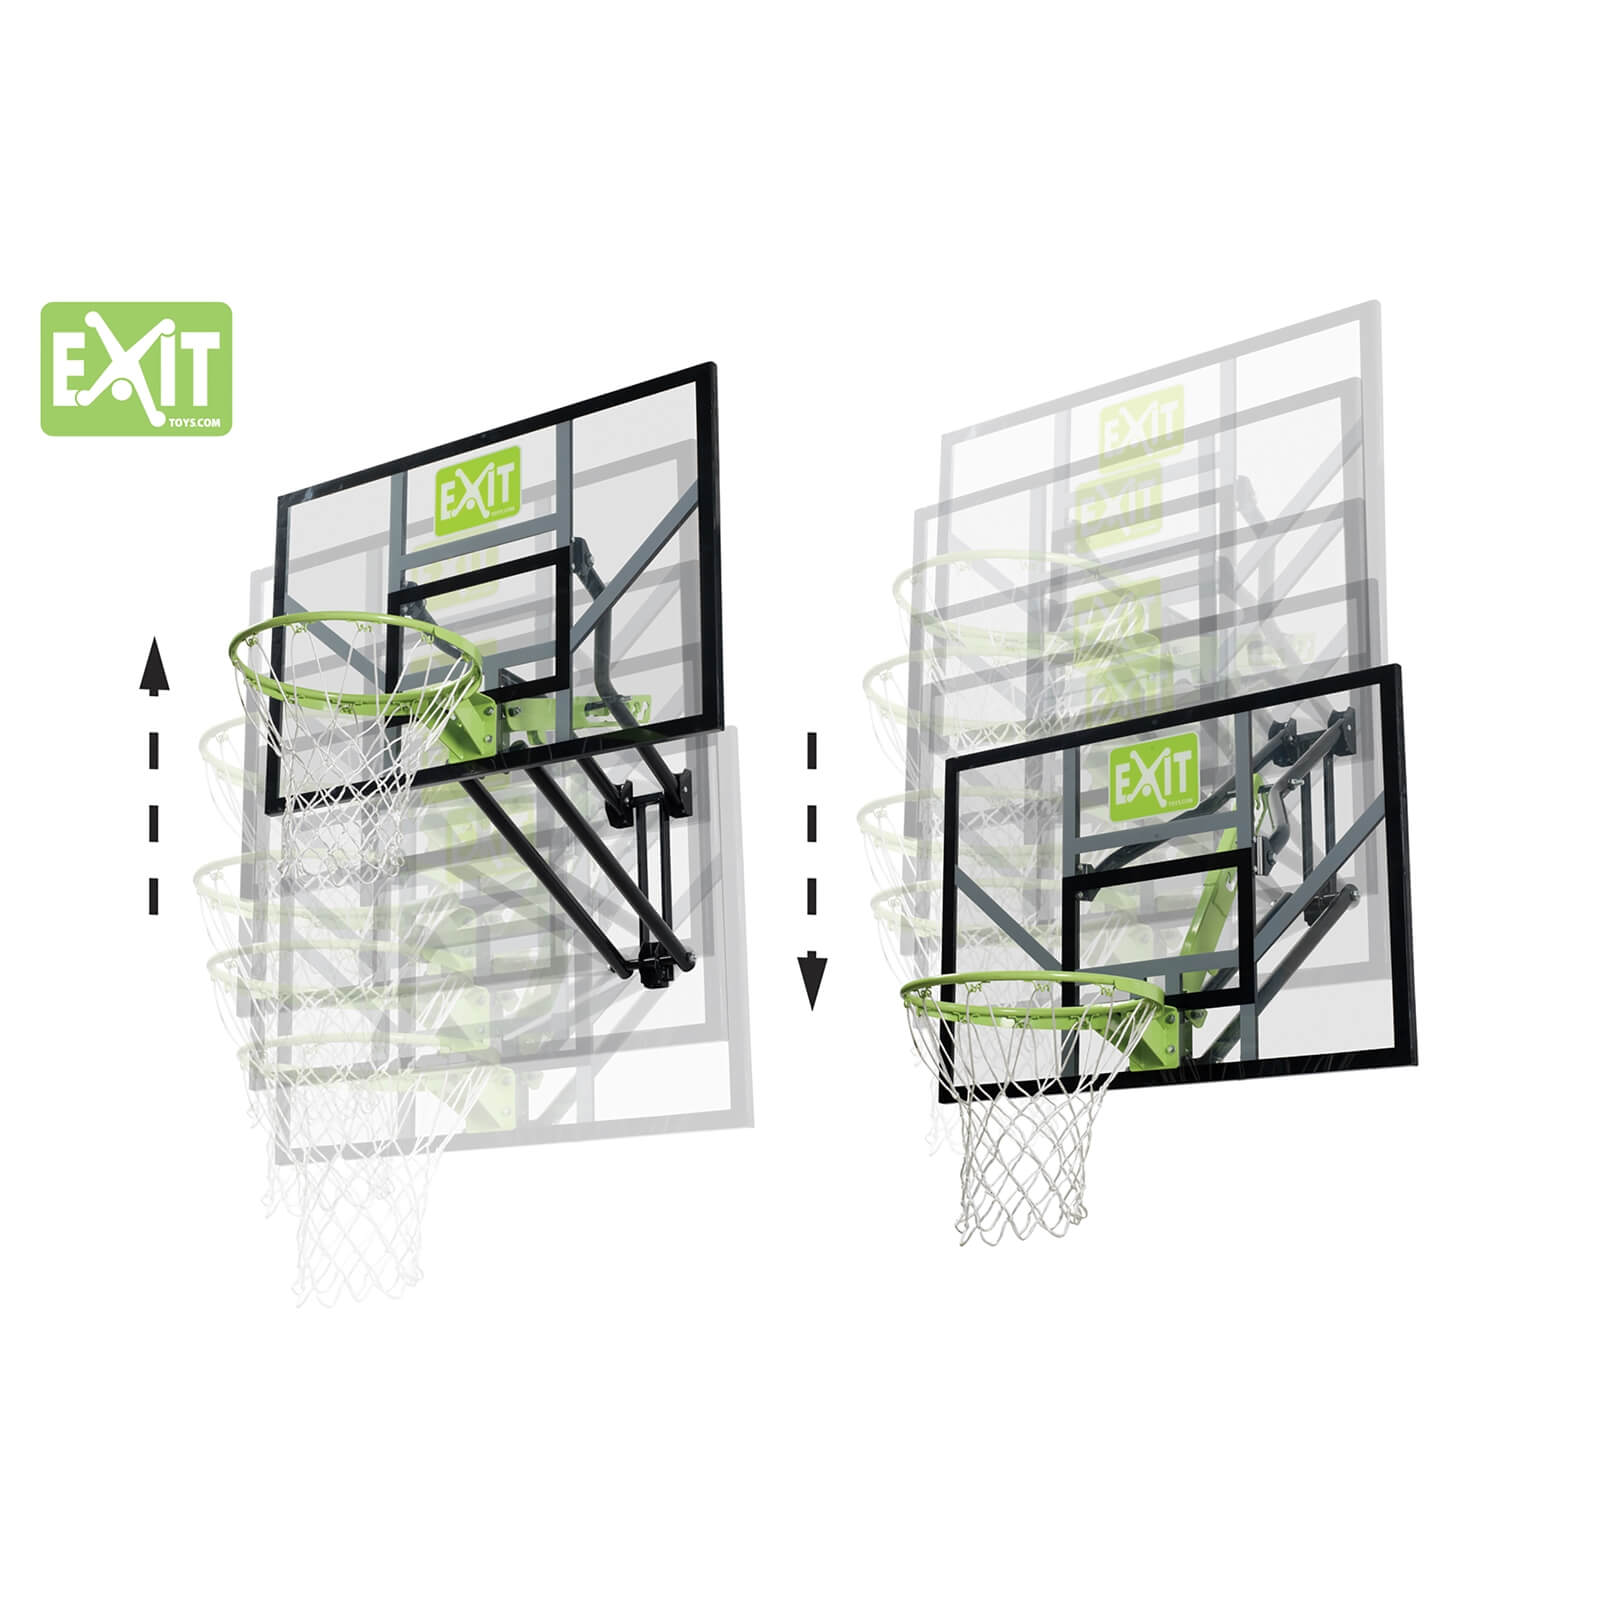 Exit Galaxy Basketball Wall Mount Basket